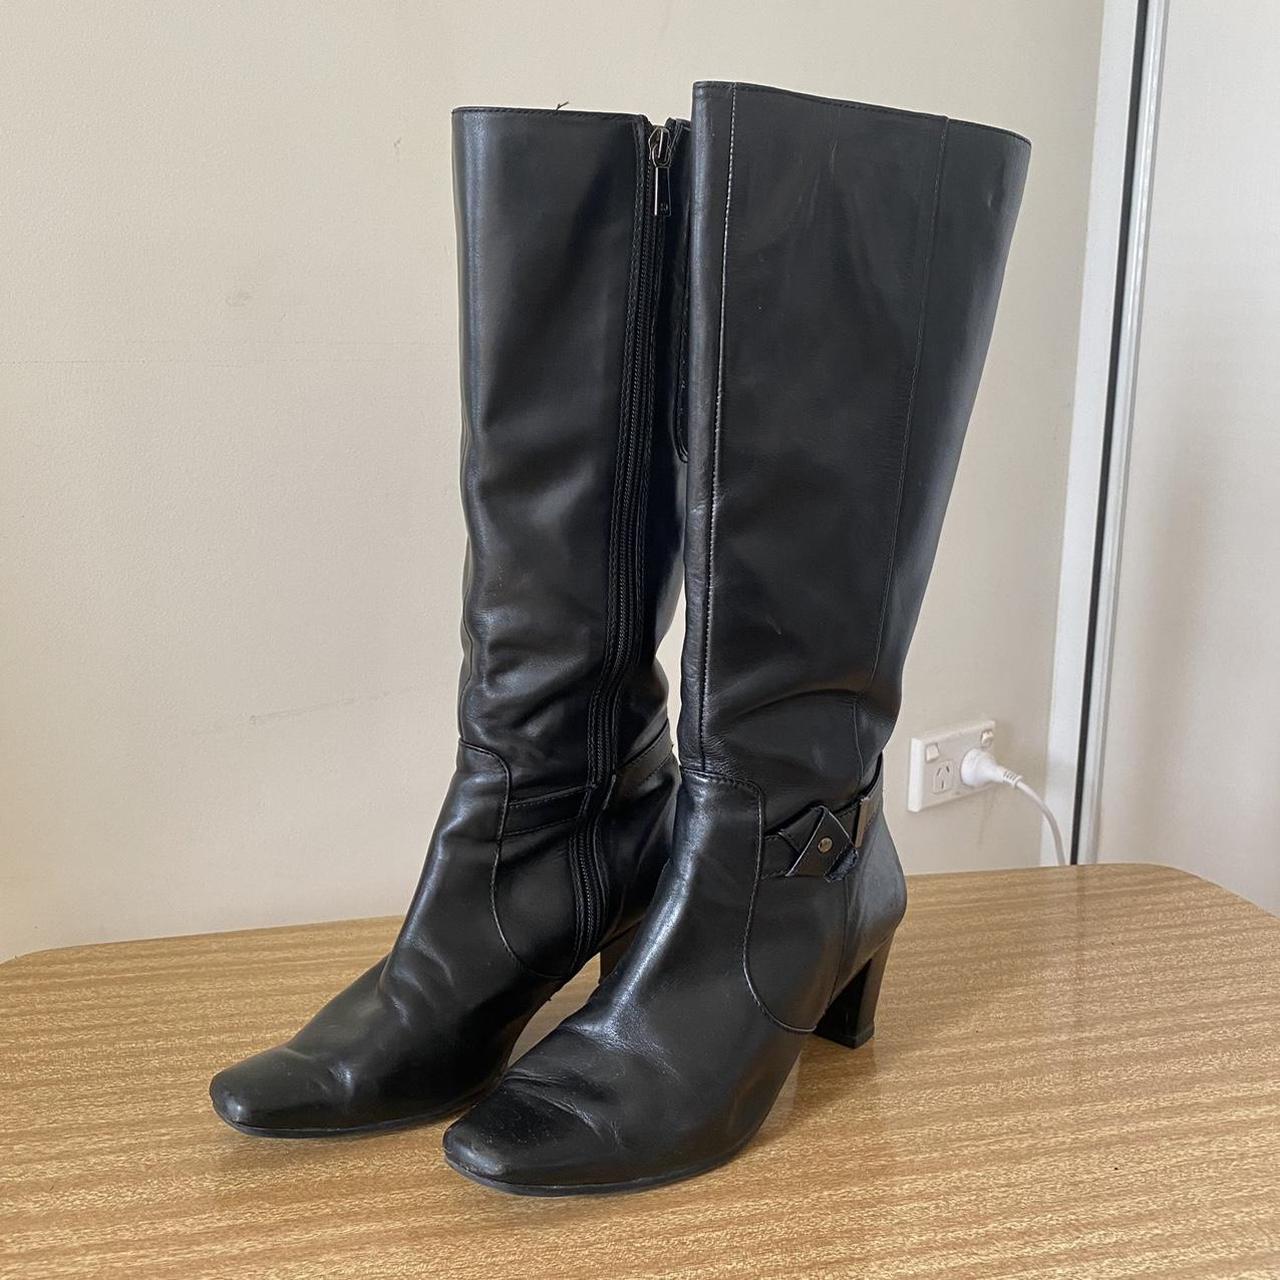 Diana Ferrari leather knee high boots in black 🌹... - Depop